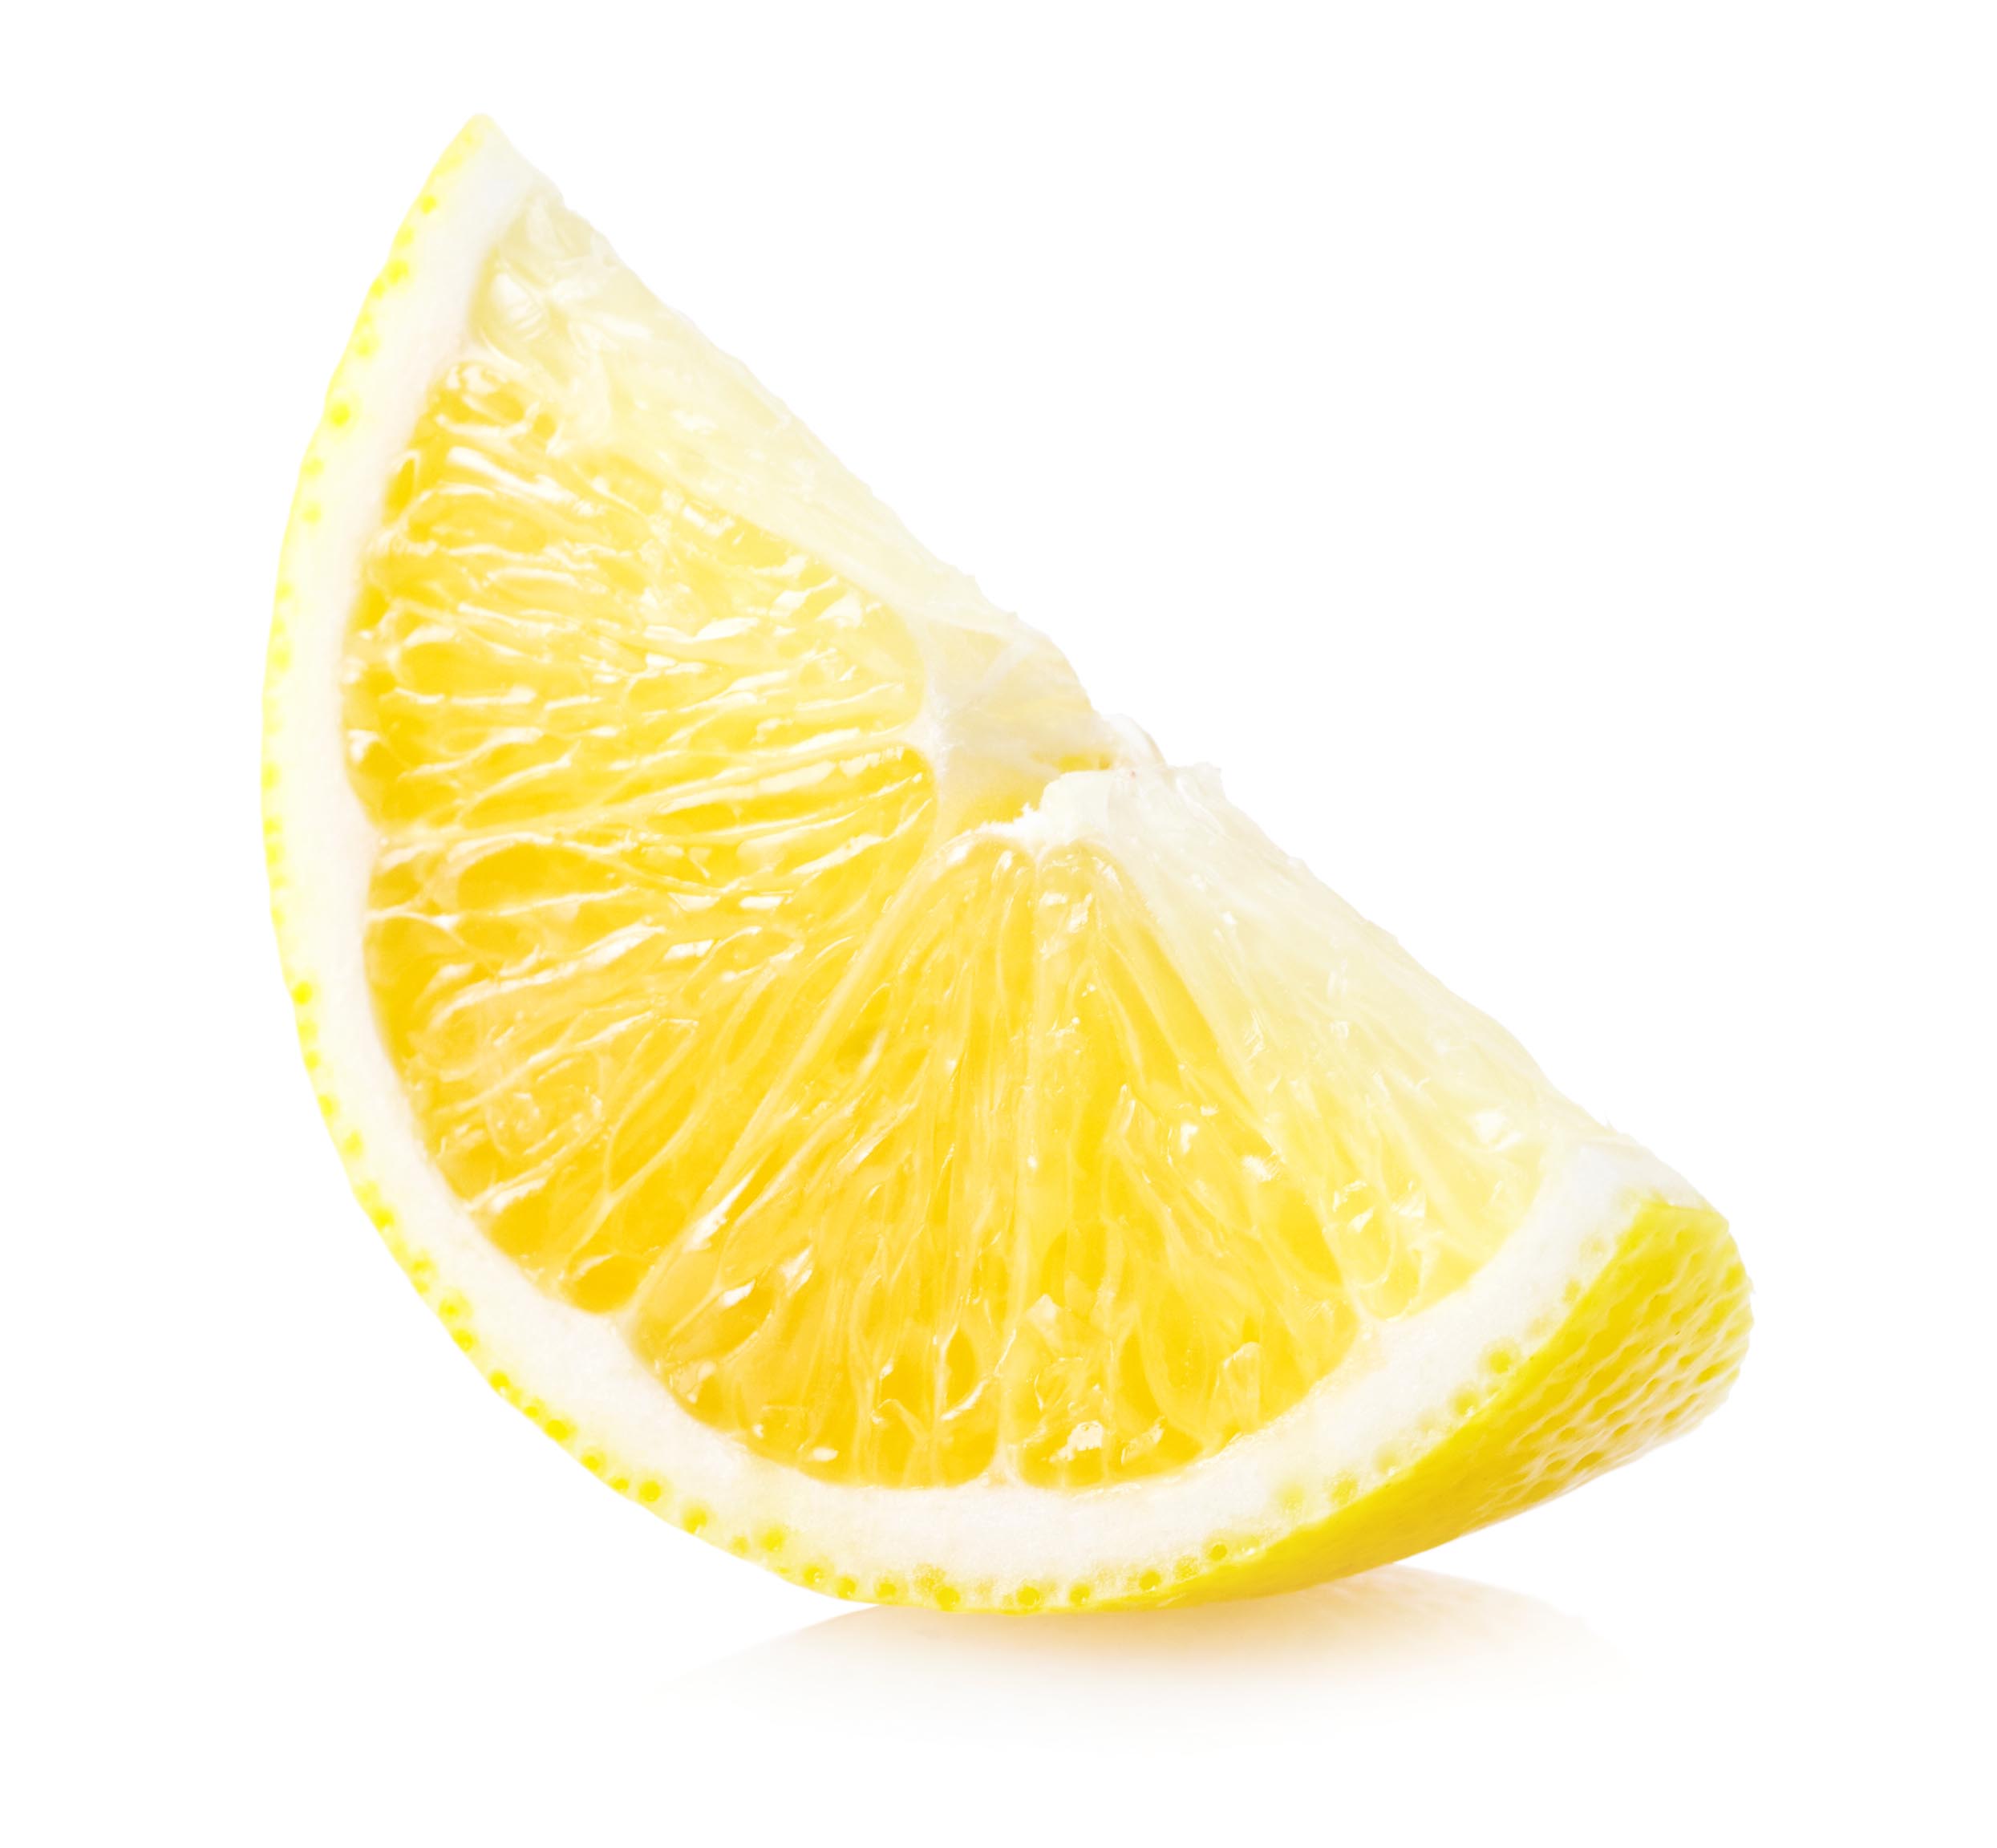 Lemon slice photo